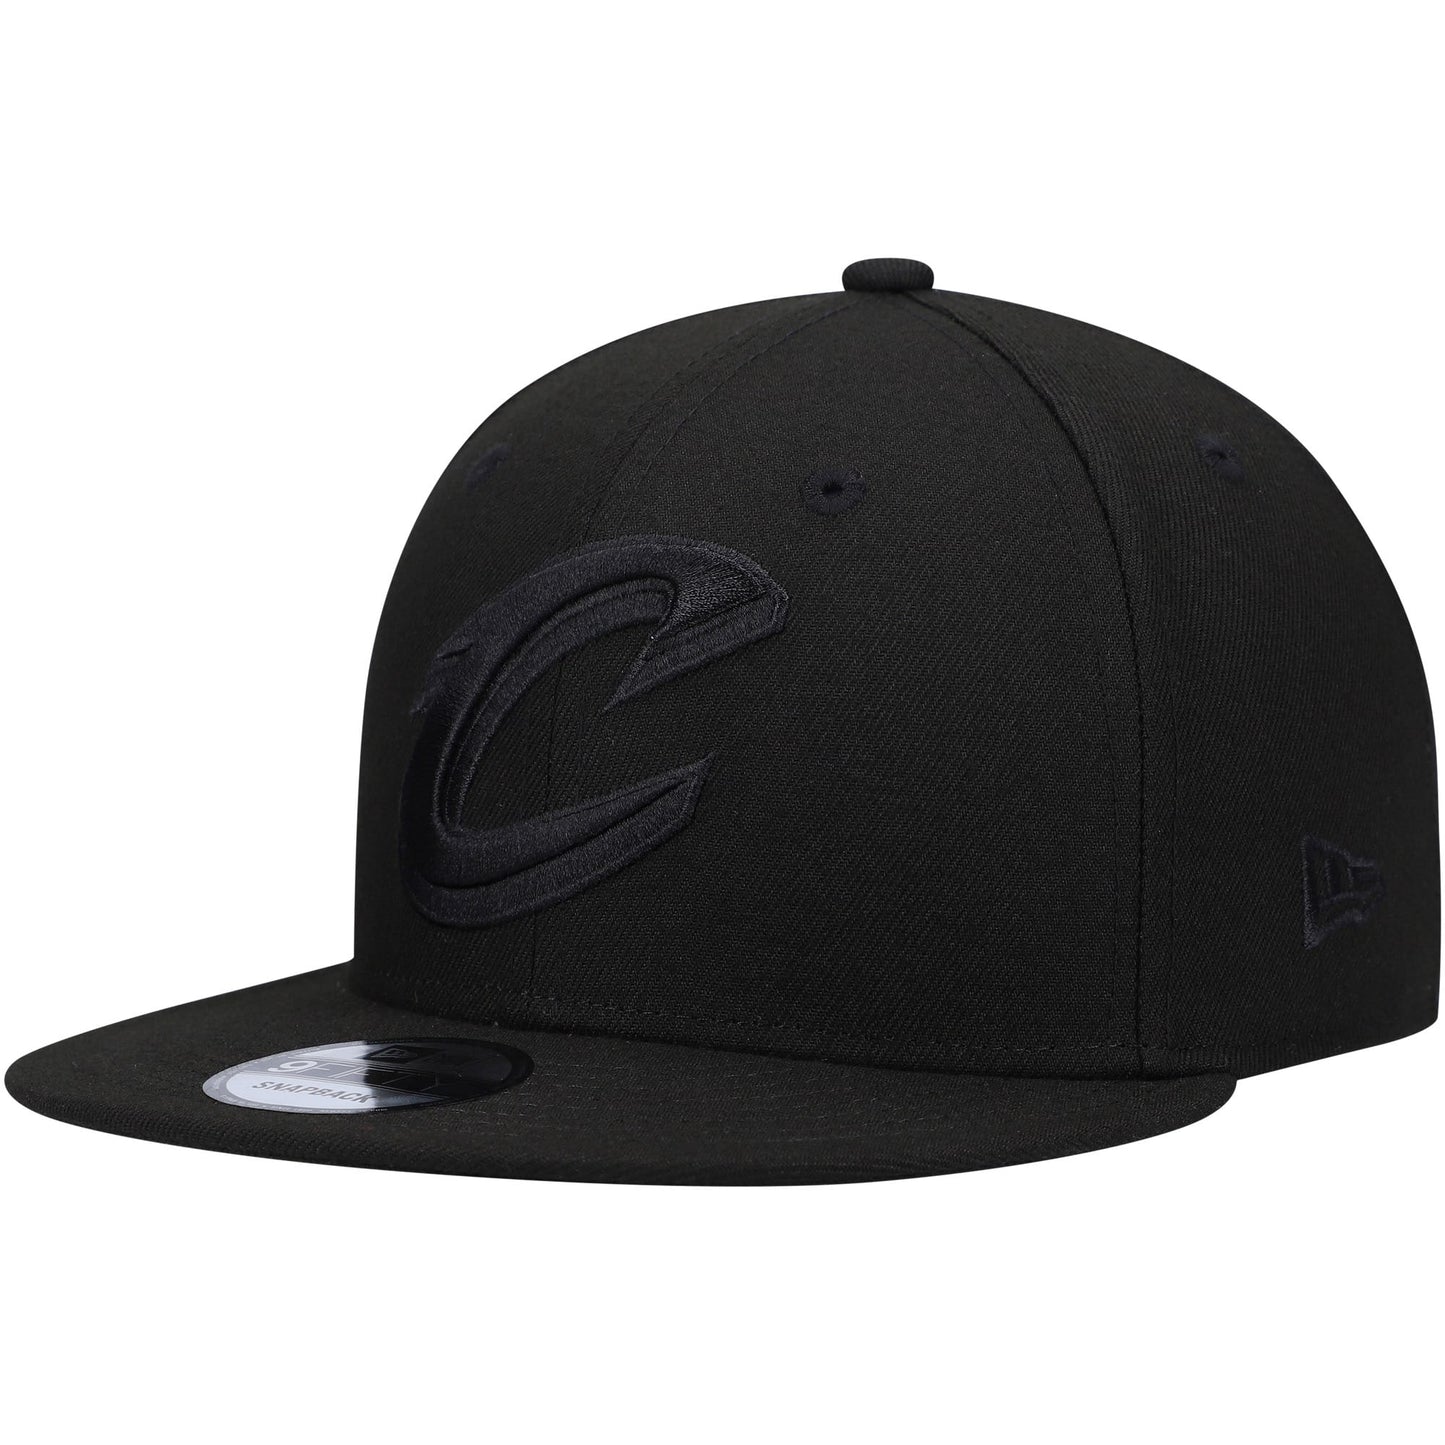 Cleveland Cavaliers New Era Black On Black 9FIFTY Snapback Hat